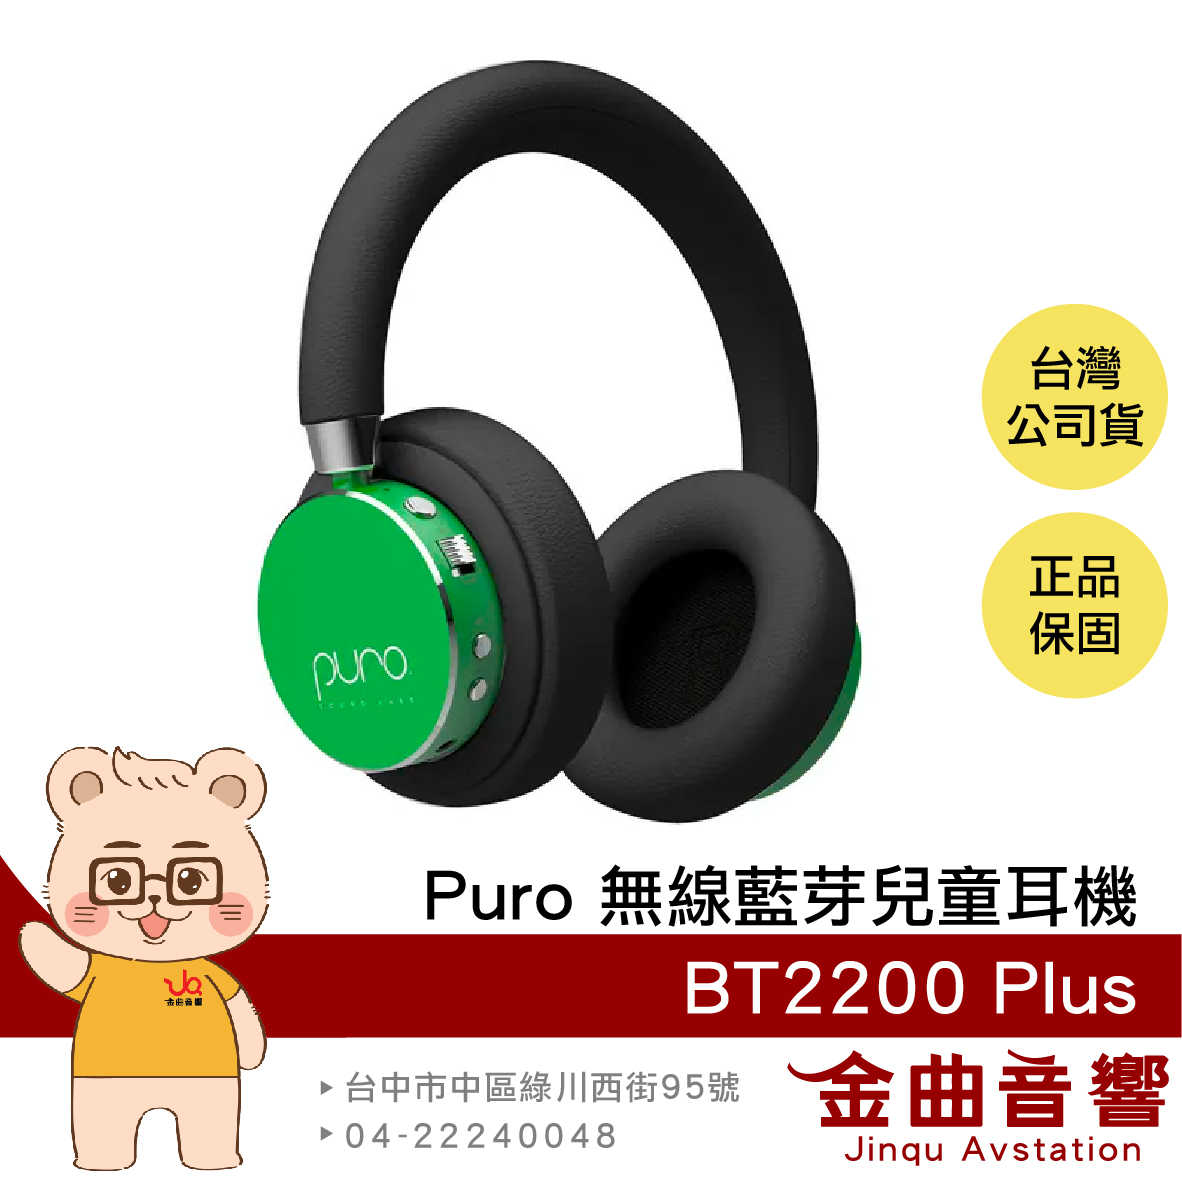 Puro BT2200 Plus 綠色 安全音量 音樂分享 可替換耳罩 耳罩式 無線 藍牙 兒童耳機 | 金曲音響